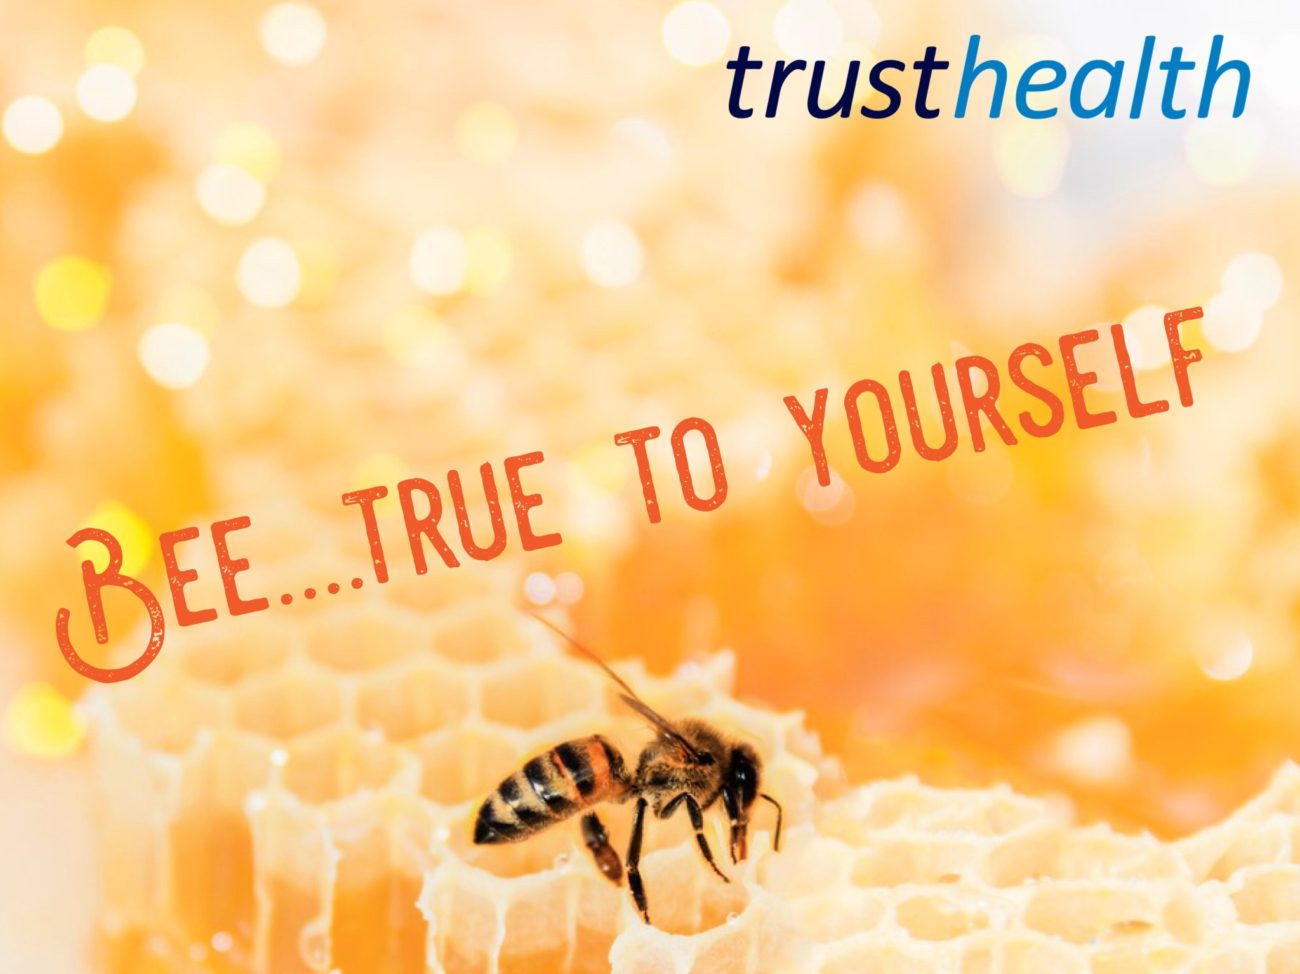 Bee…….true to yourself